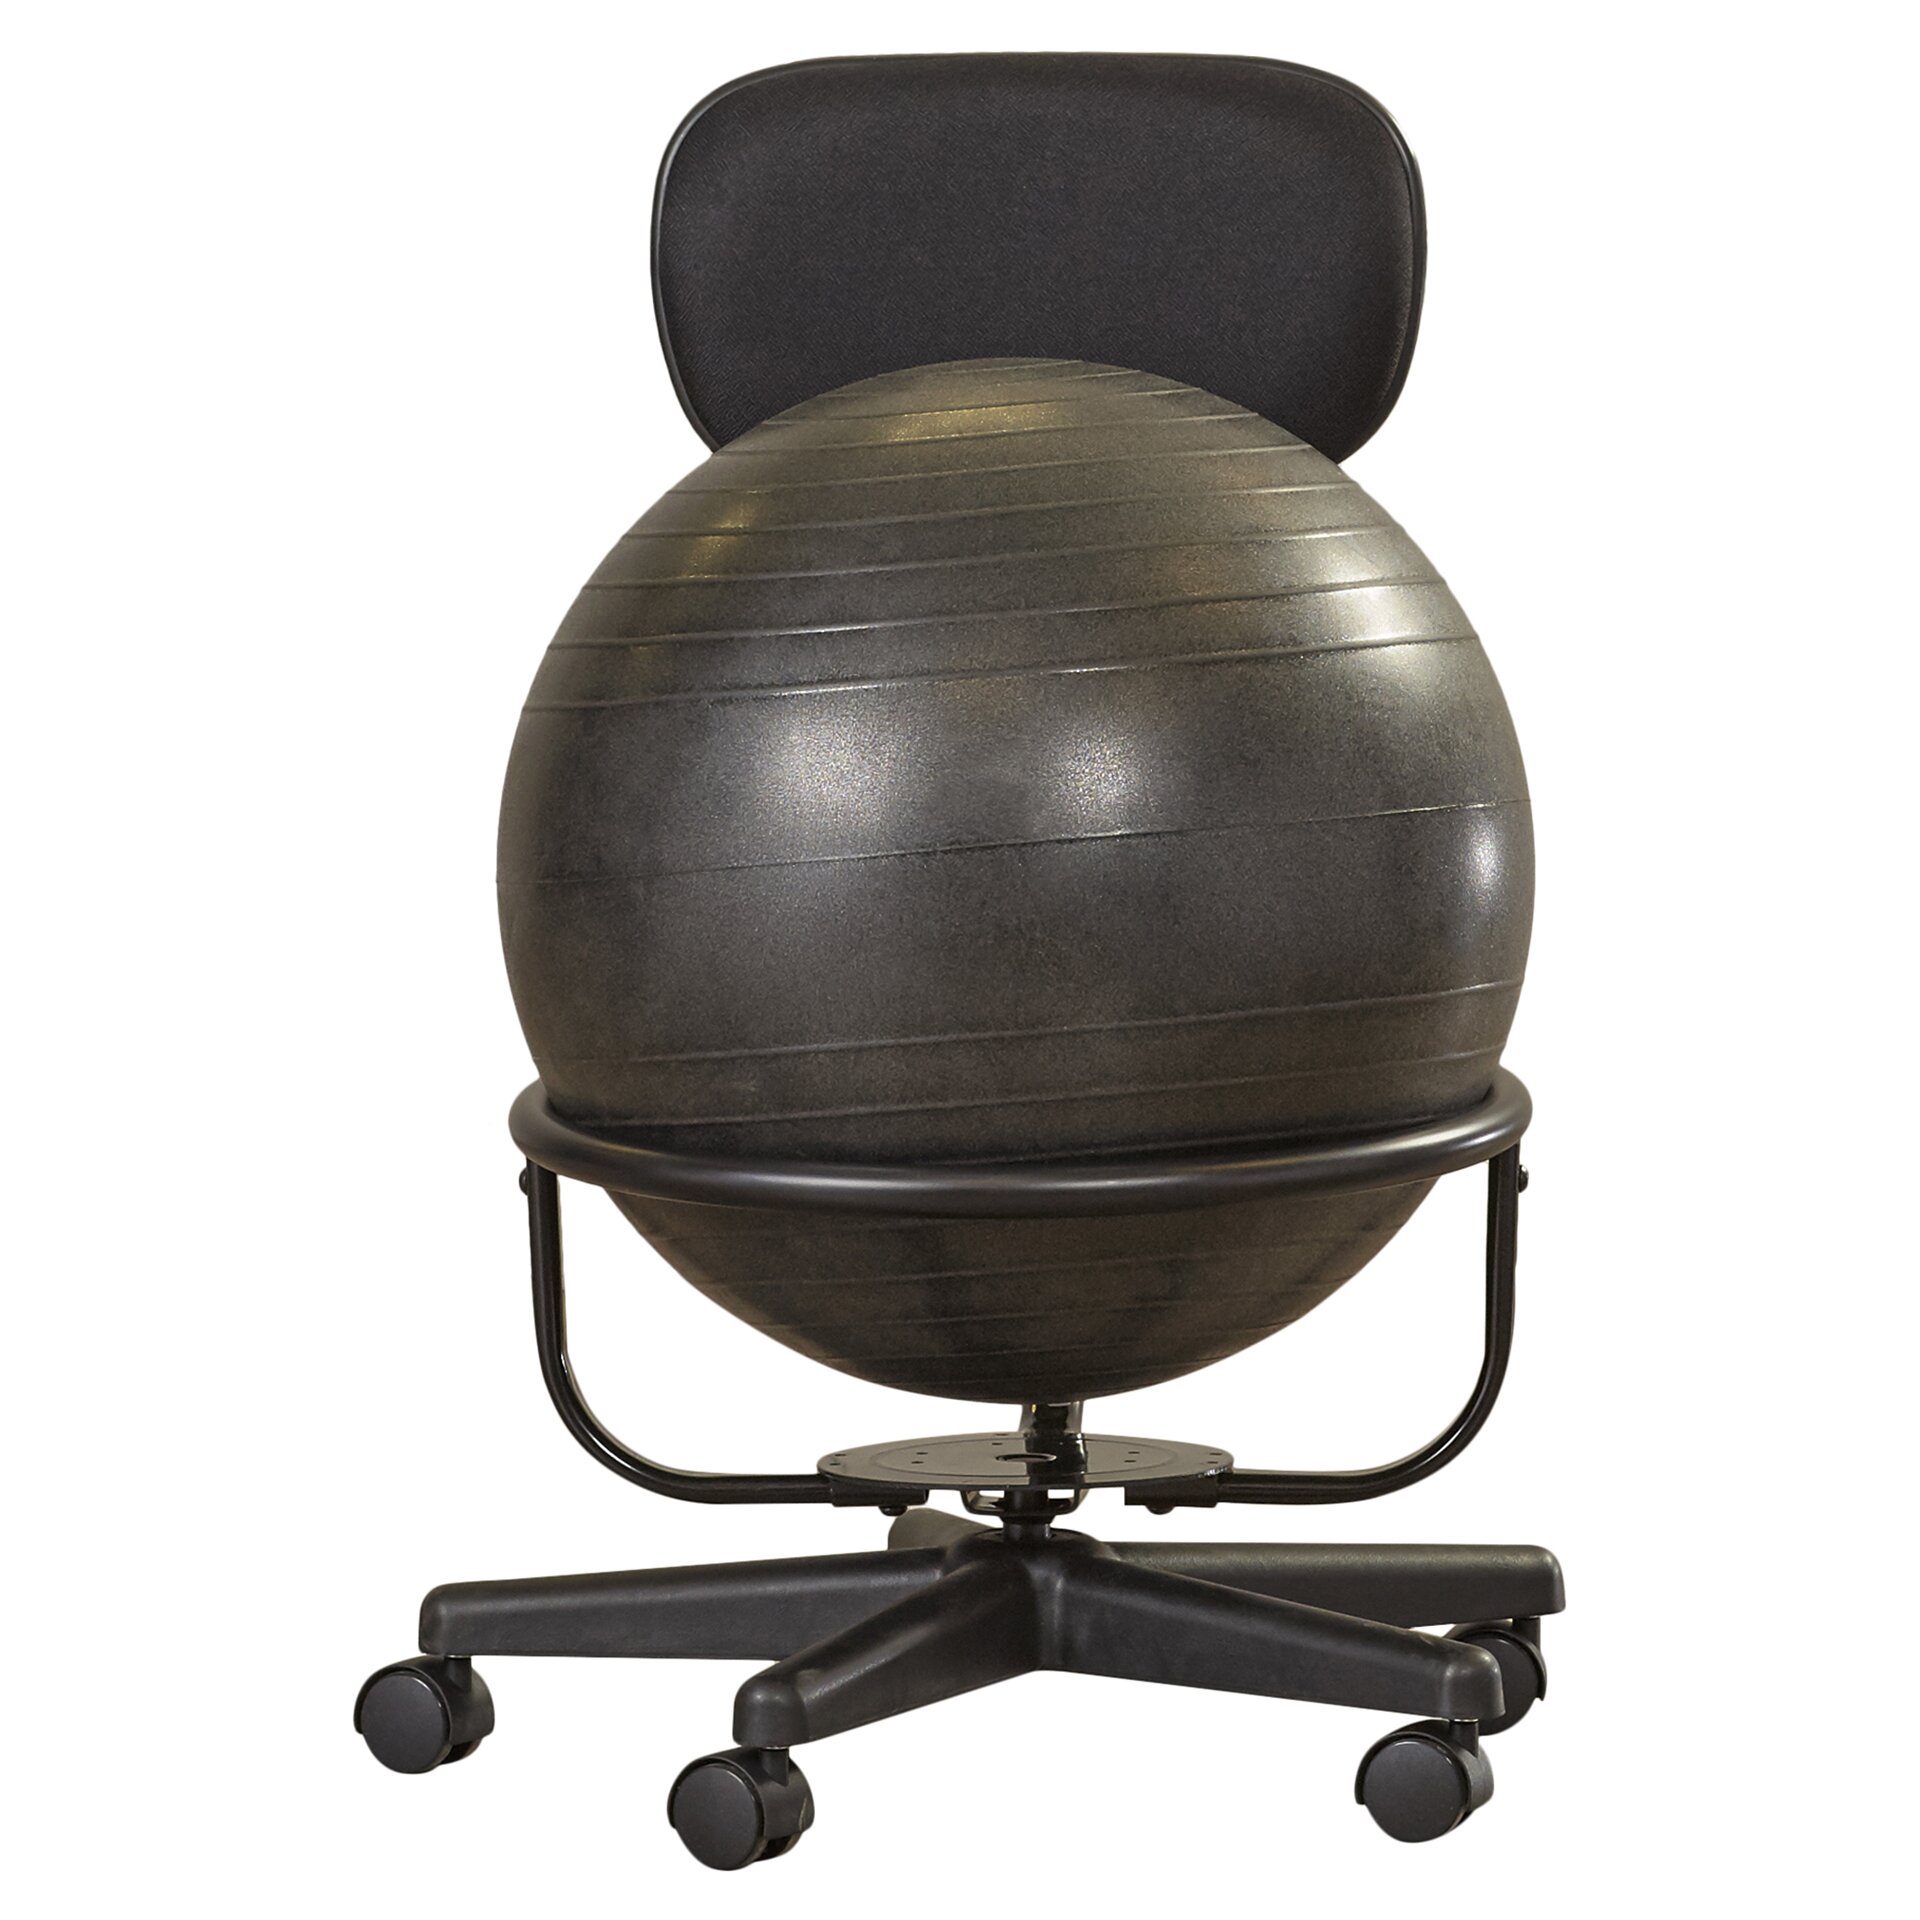 Using An Exercise Ball As A Chair - dgirldesigns